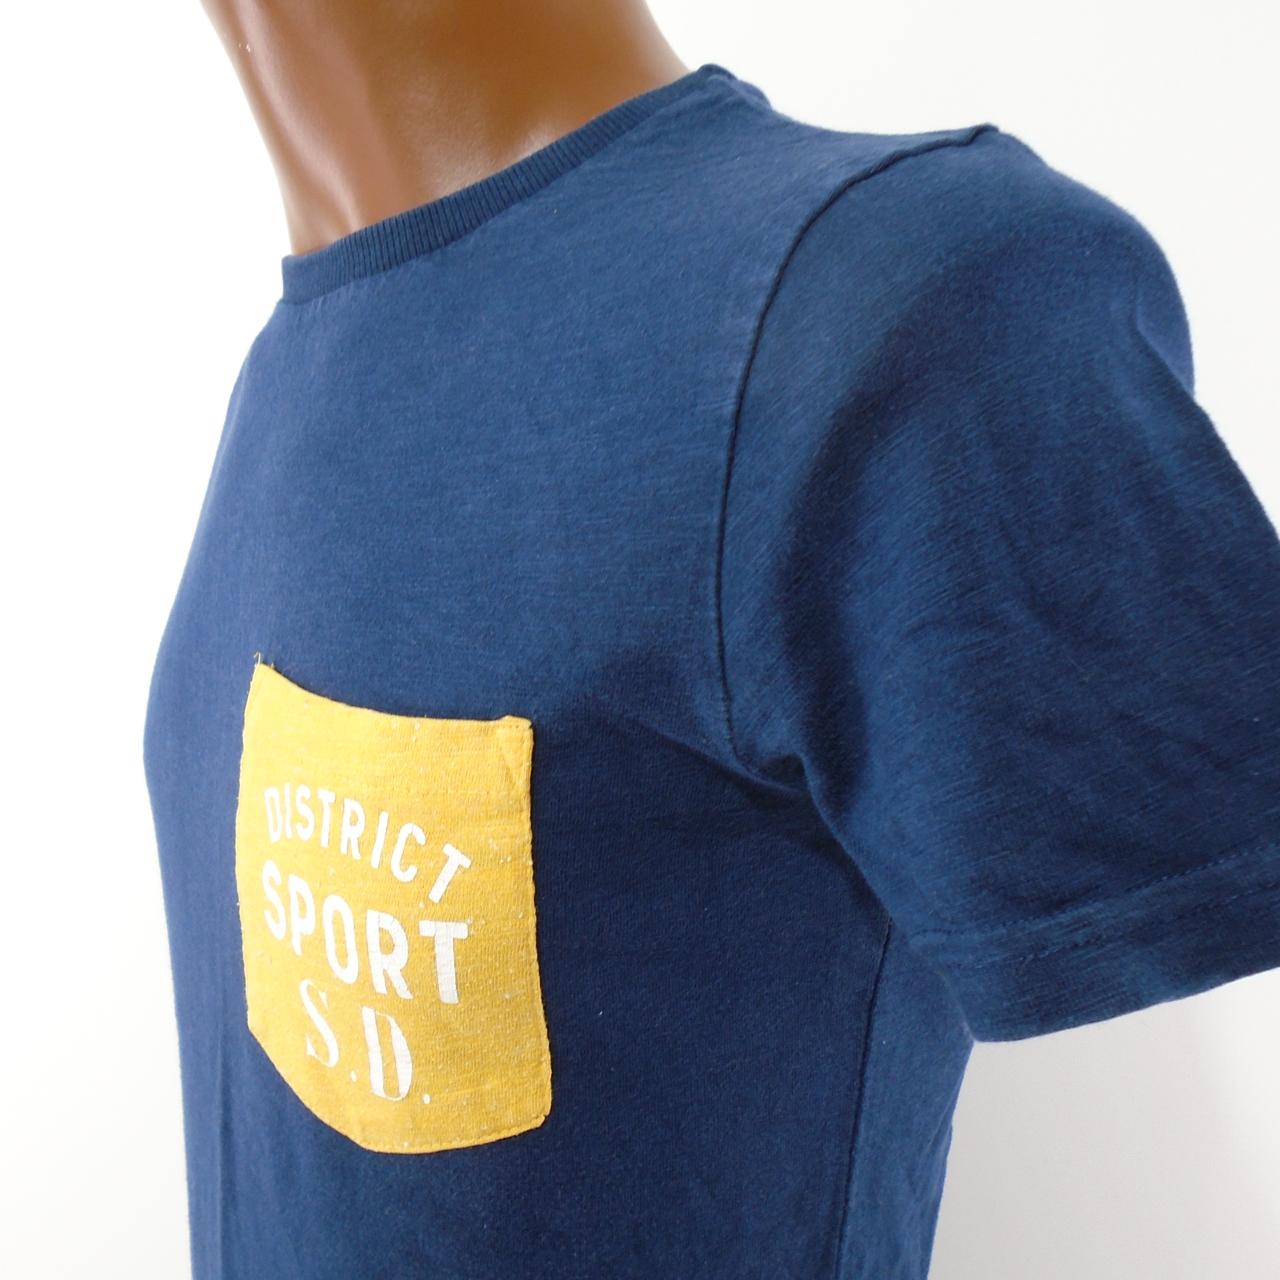 Camiseta de Superdry para hombre.  Azul oscuro.  S. Usado.  Bien